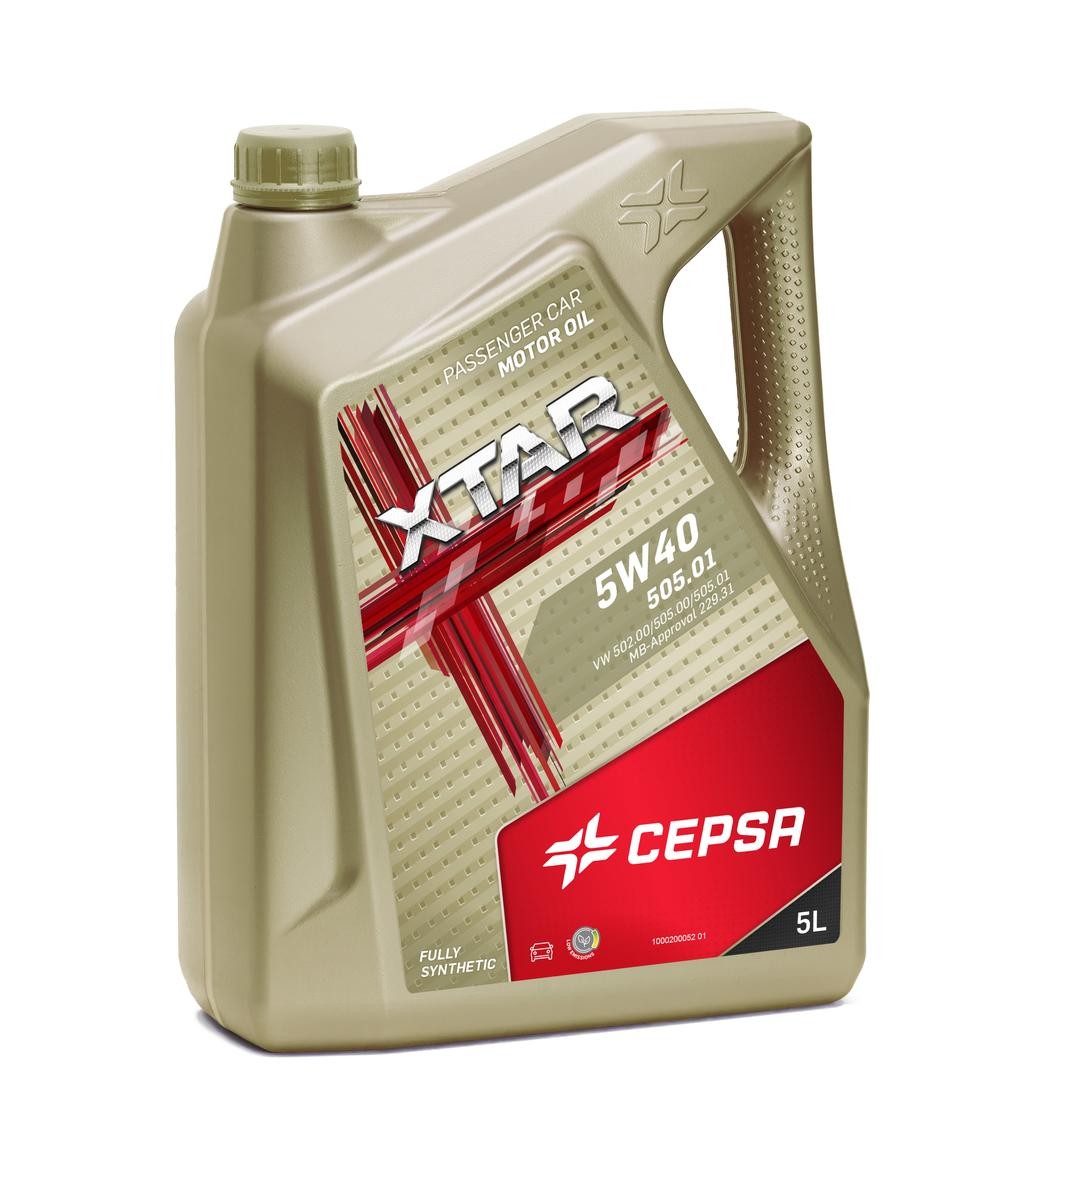 CEPSA XTAR, 505.01 5W-40, 5l, Synthetic, Full Synthetic Oil Motor oil 513923090 buy